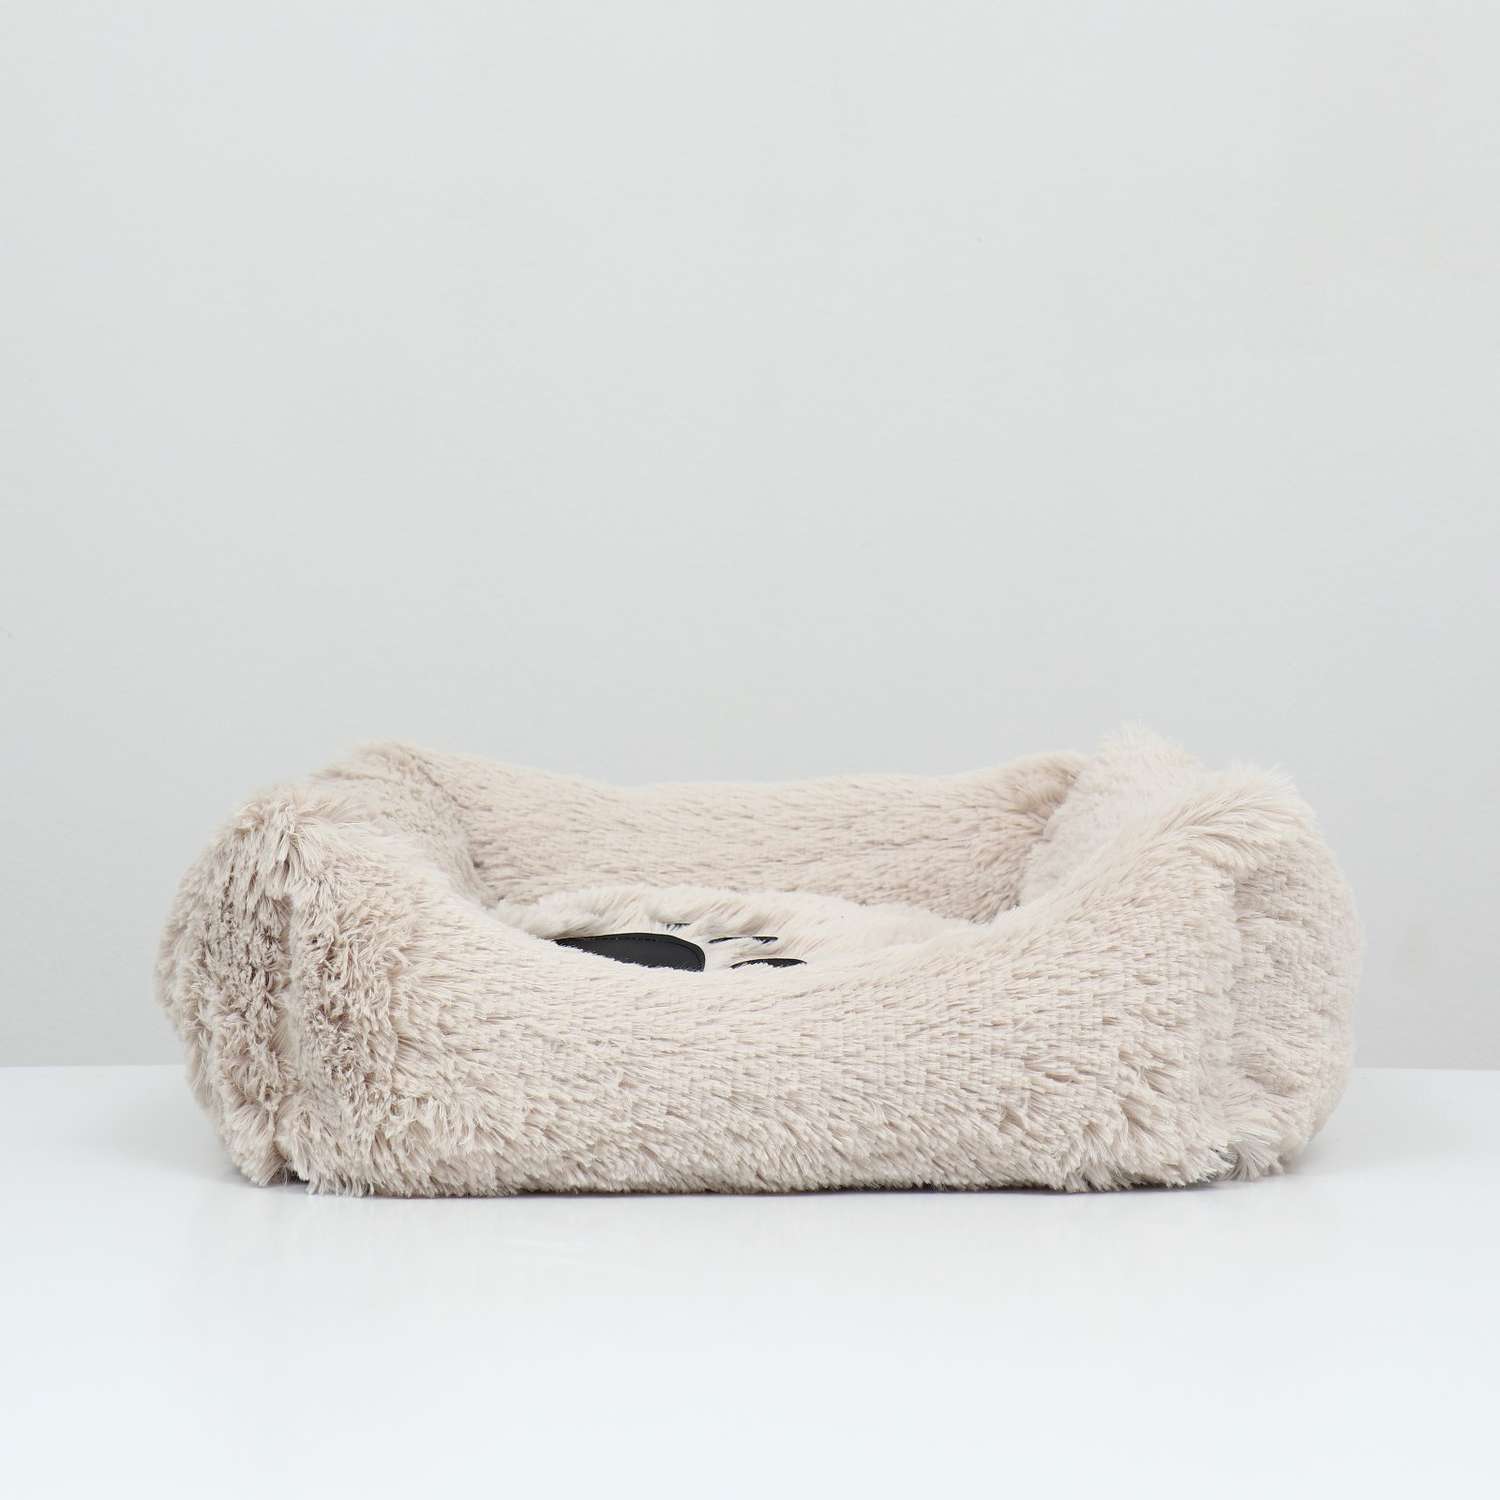 Лежак Пижон с подушкой мех сатин периотек 45х45х15 см бежевый - фото 2